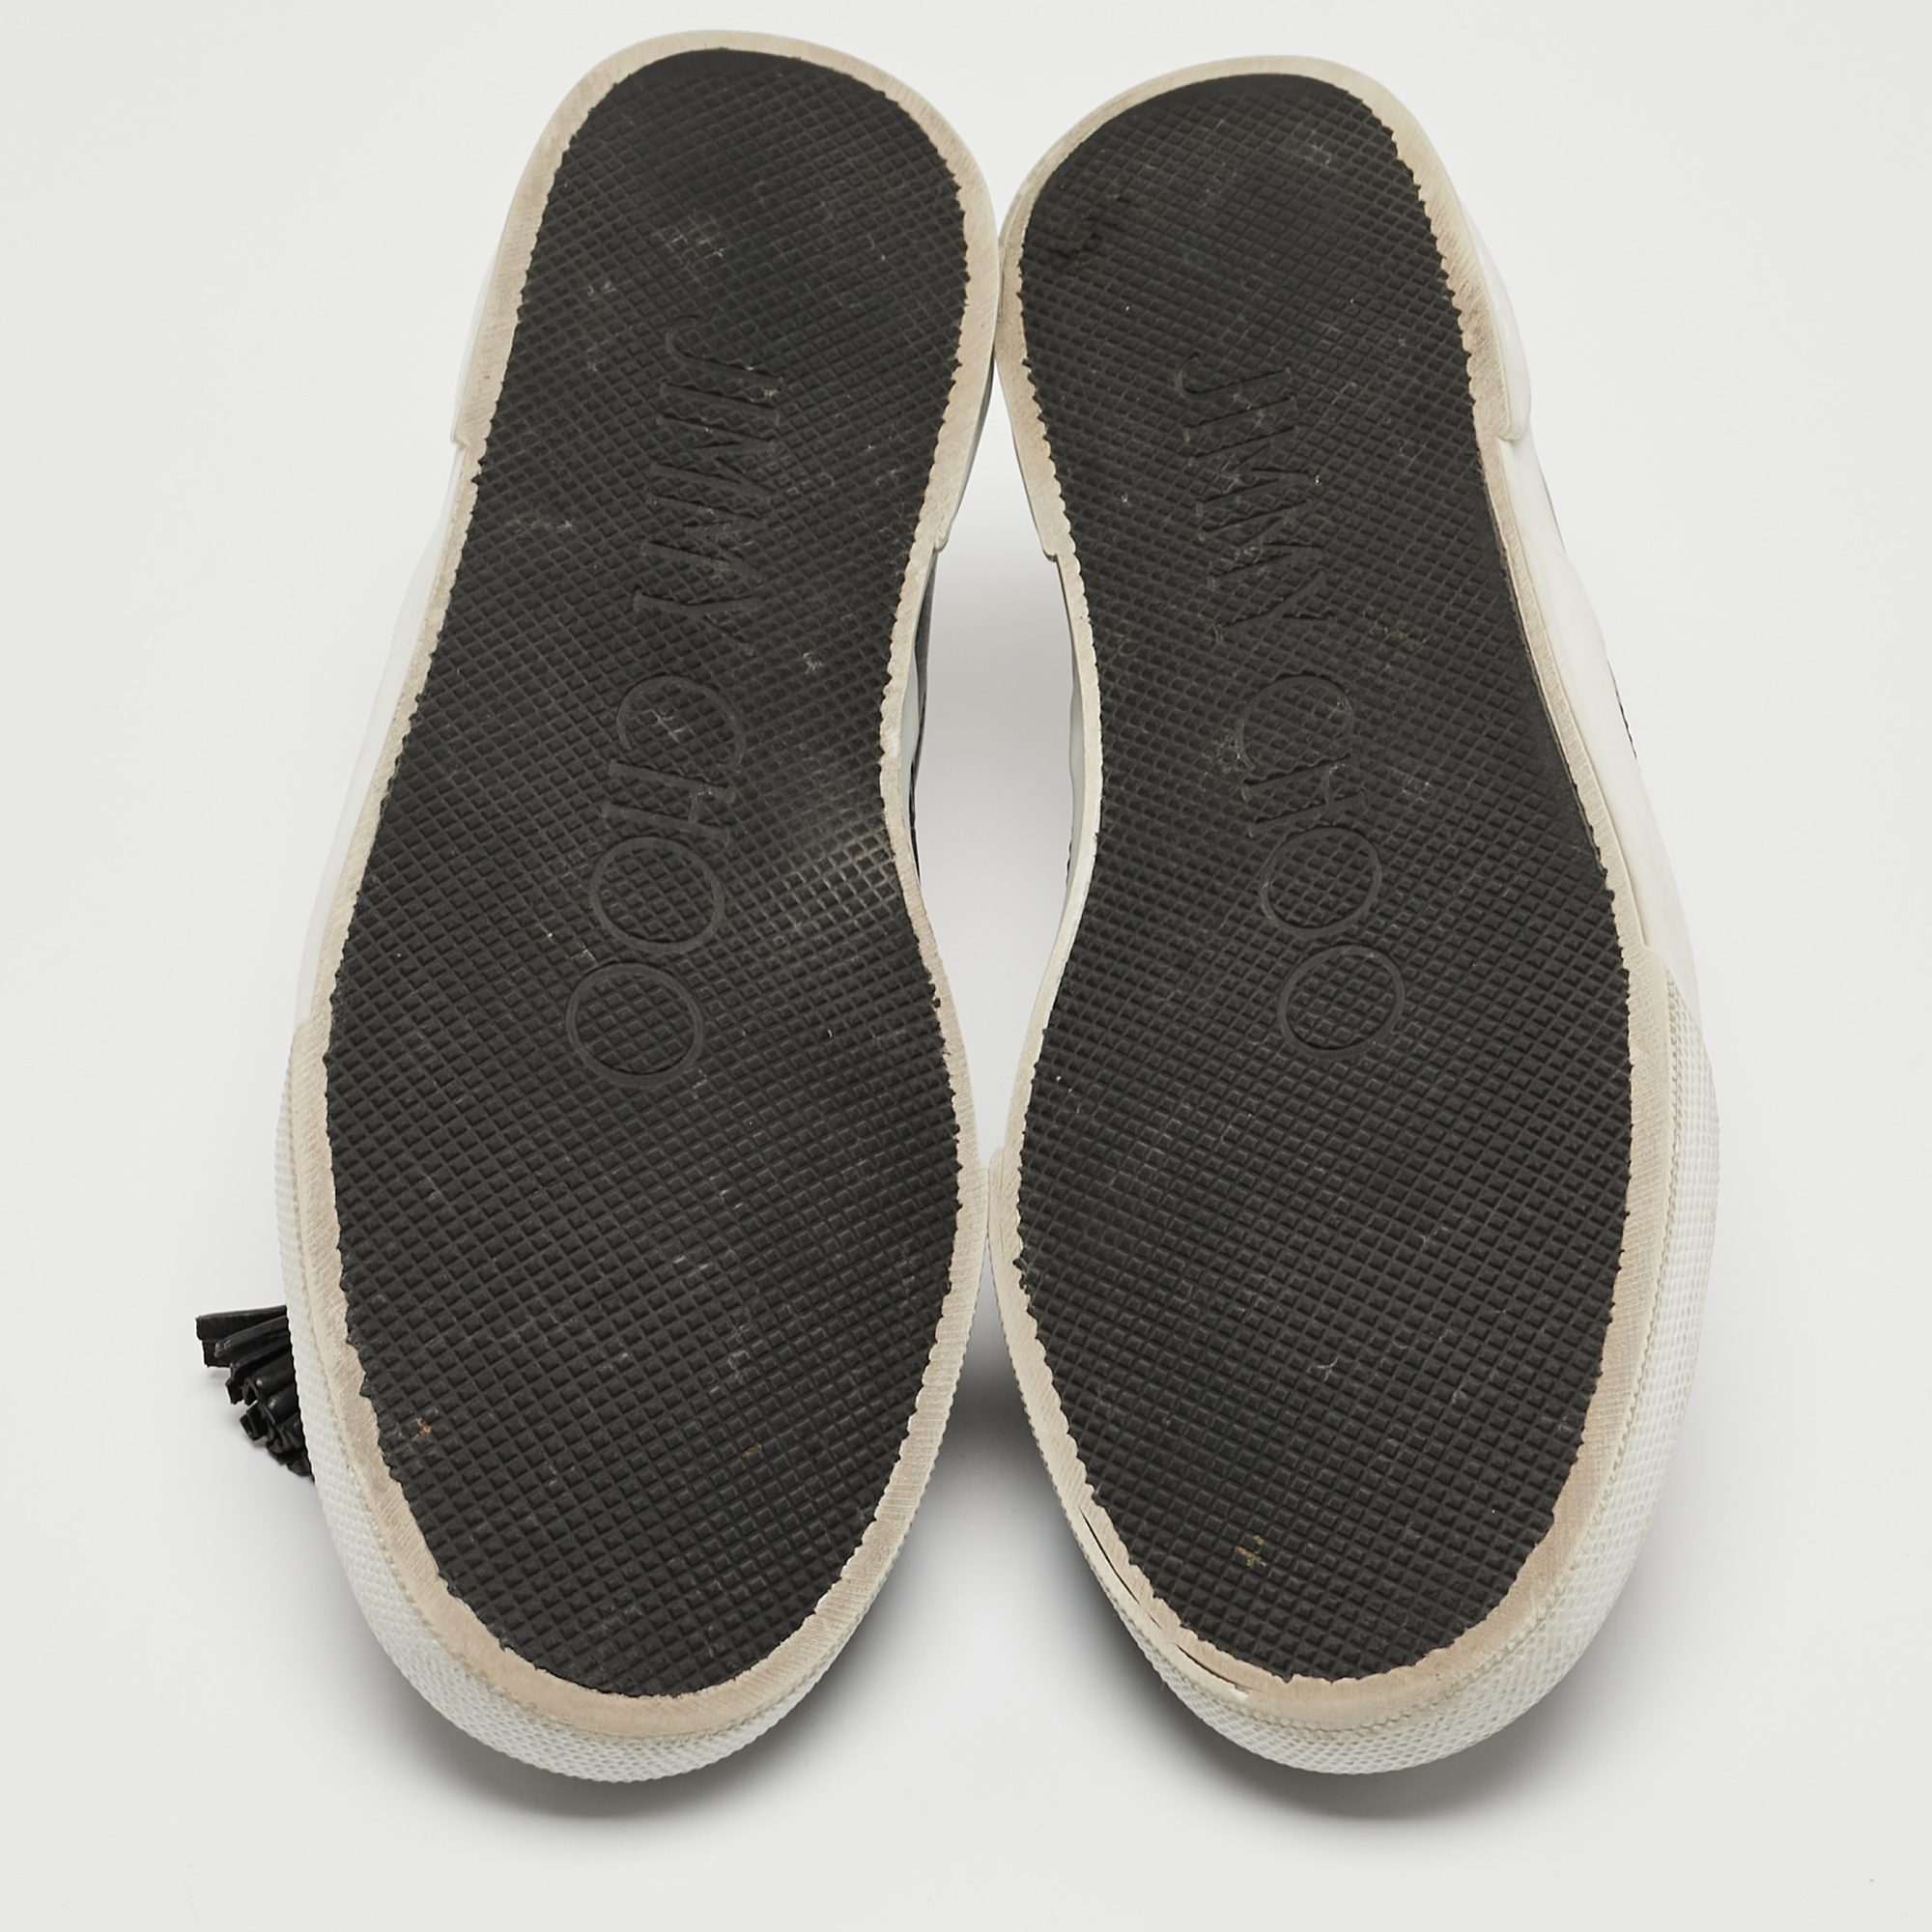 Jimmy Choo Black Leather  Fringes Tassels Loafers Size 37